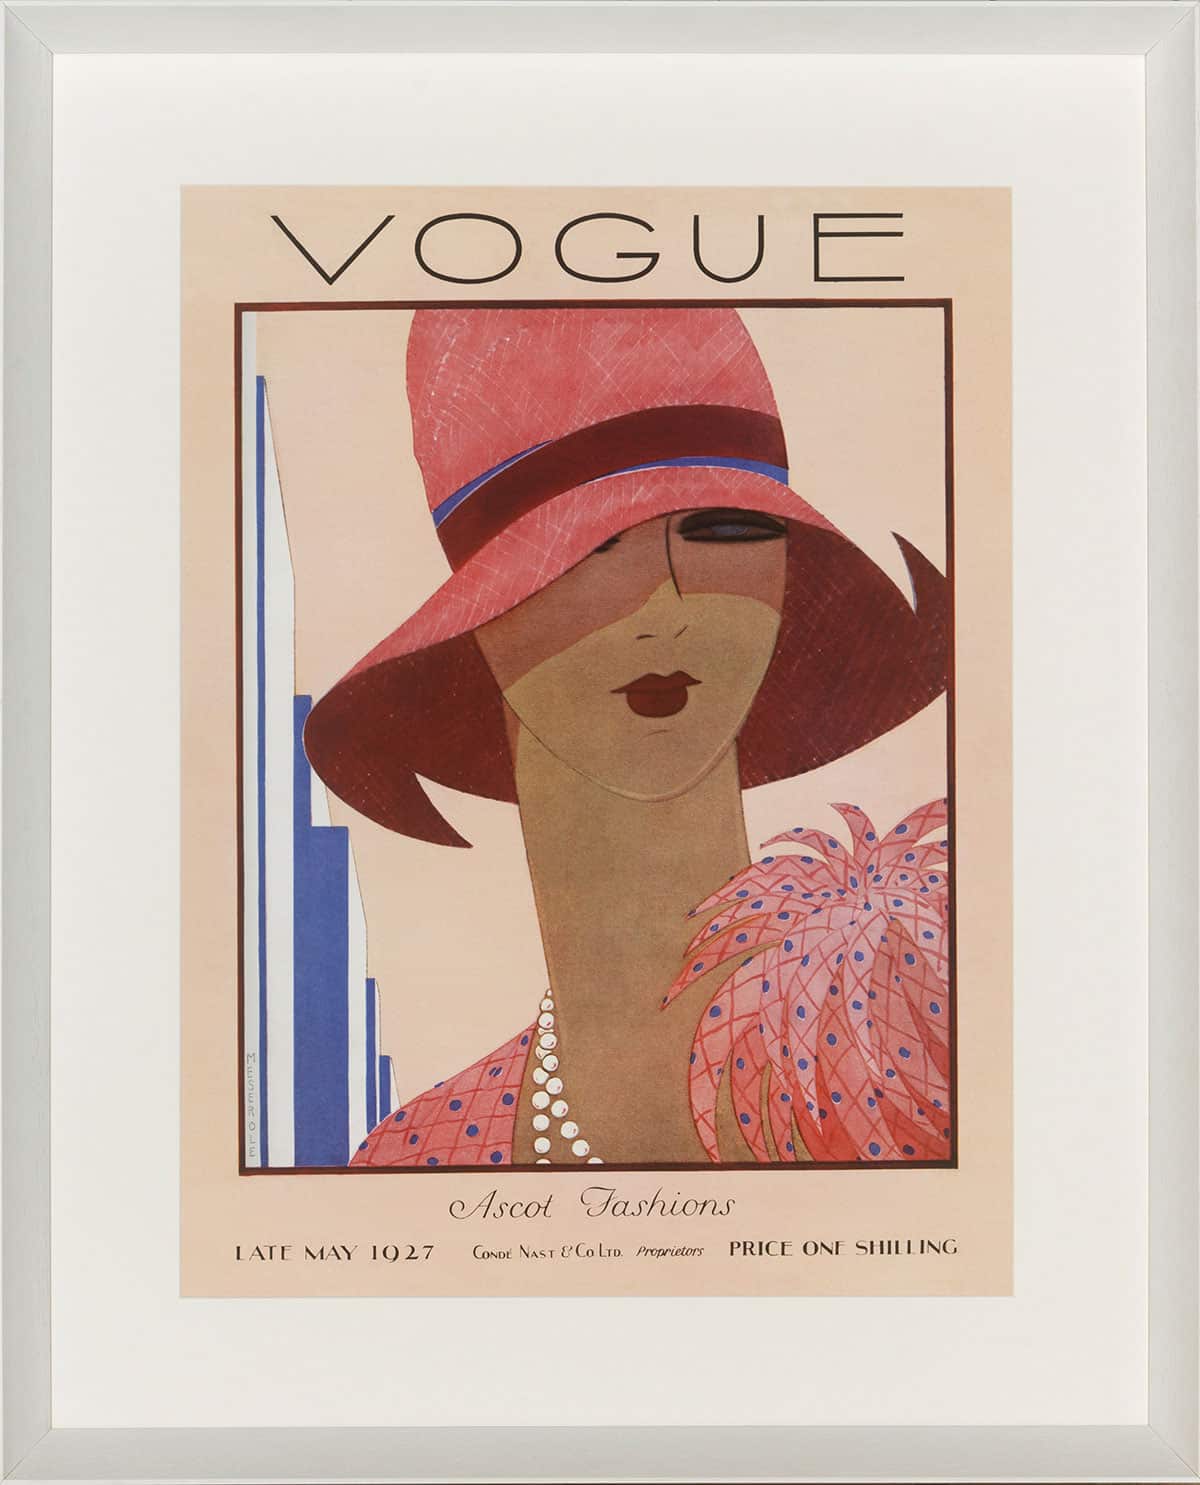 ablo-blommaert-vogue-collection-vogue-may-1927-harriet-meserole-b607-001shop